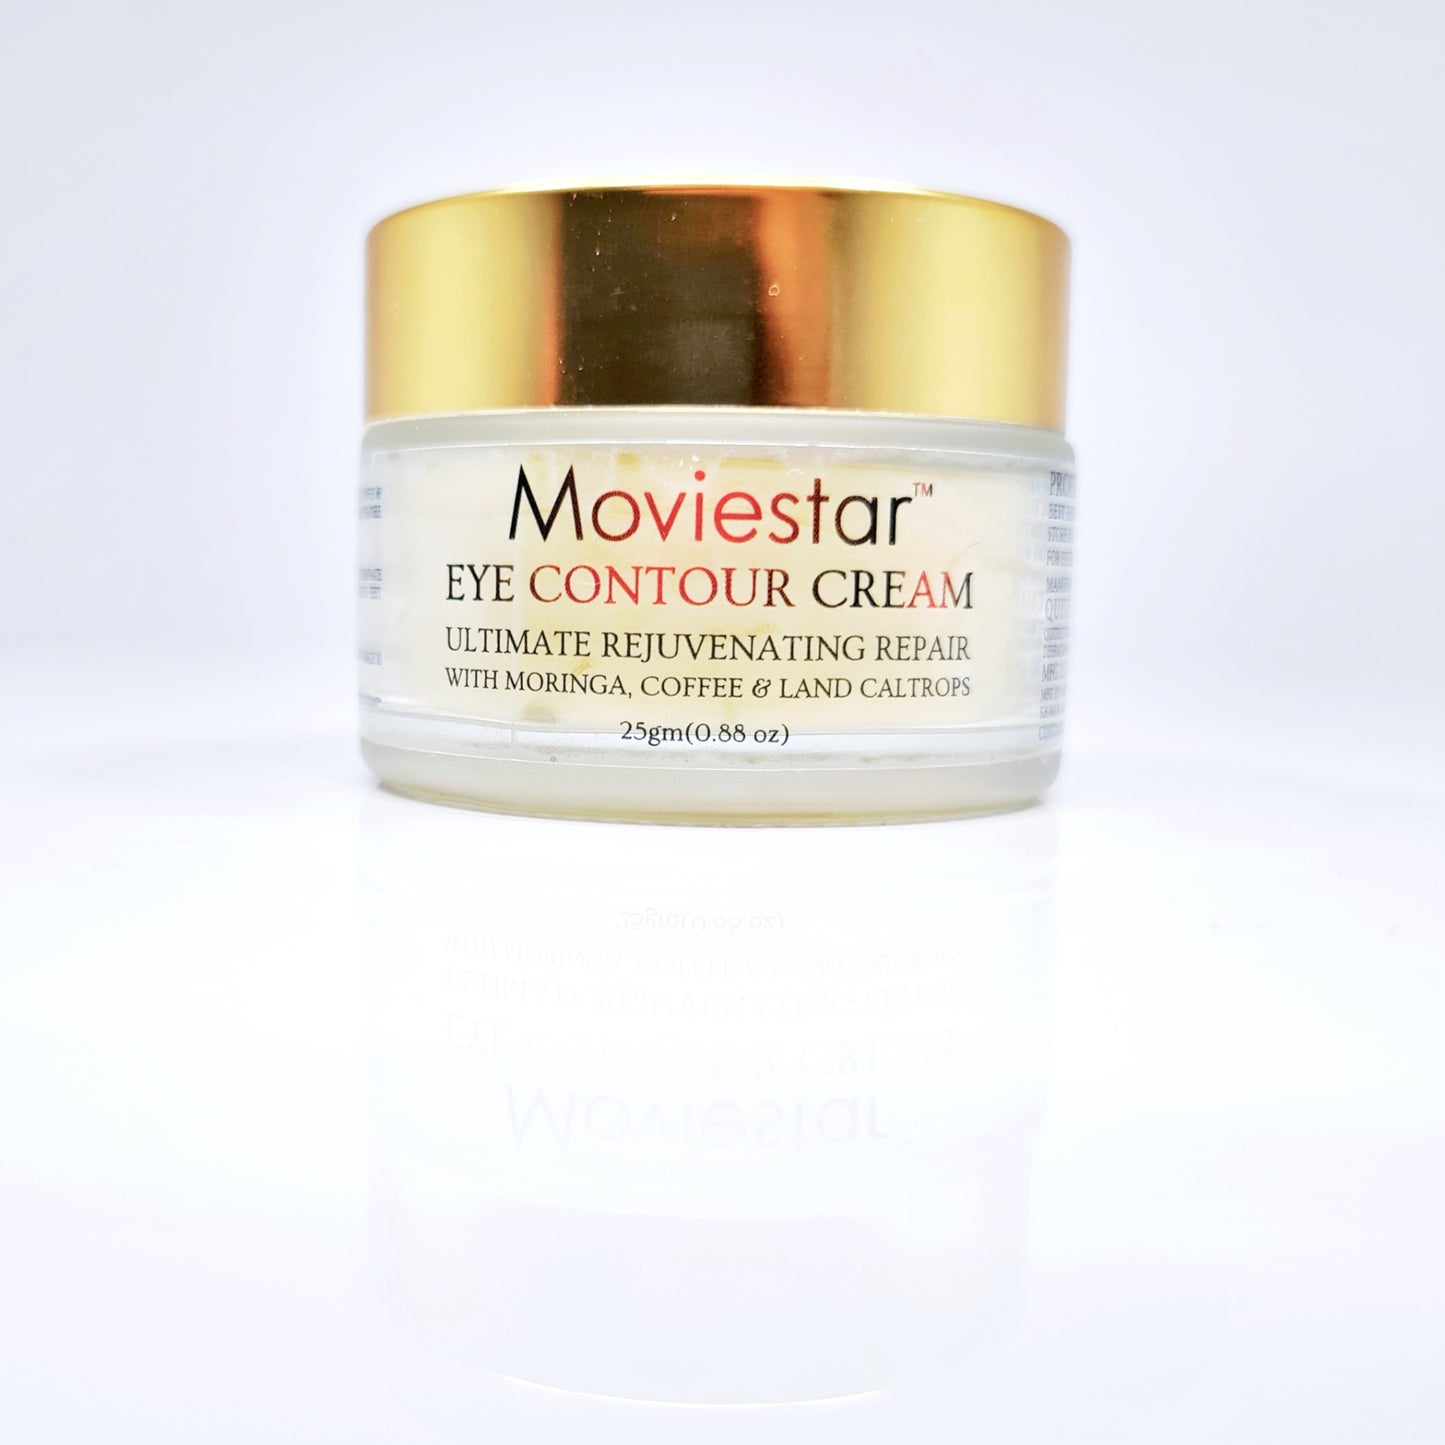 Moviestar™ Eye Contour Cream